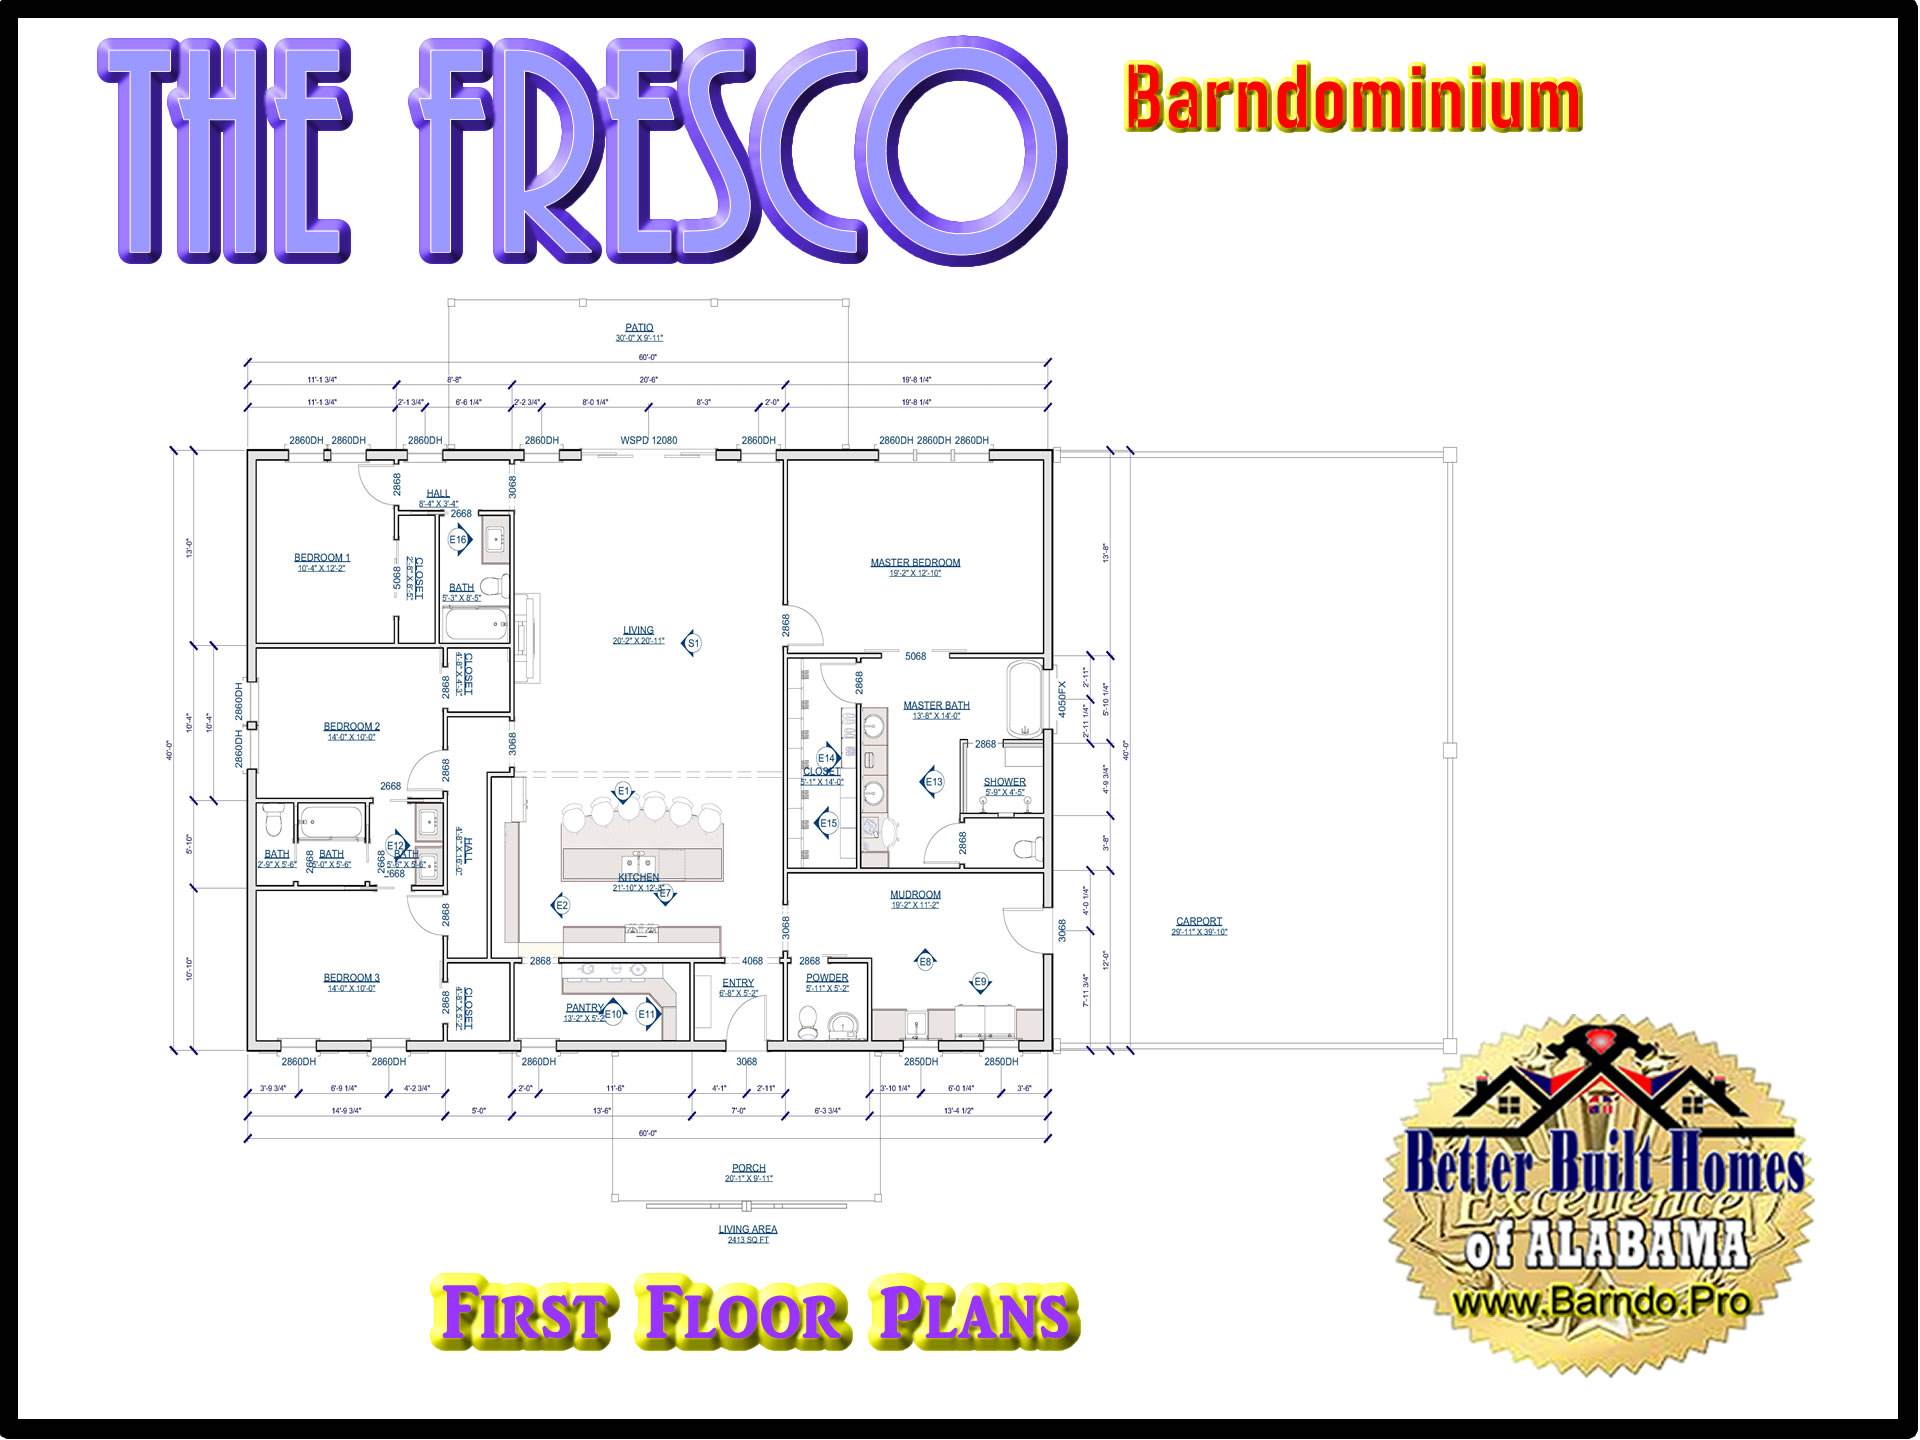 FRESCO BARNDOMINIUM FLOORPLANS AND BARNDO FLOORPLANS BUILT BY BETTER BUILT HOMES OF ALABAMA